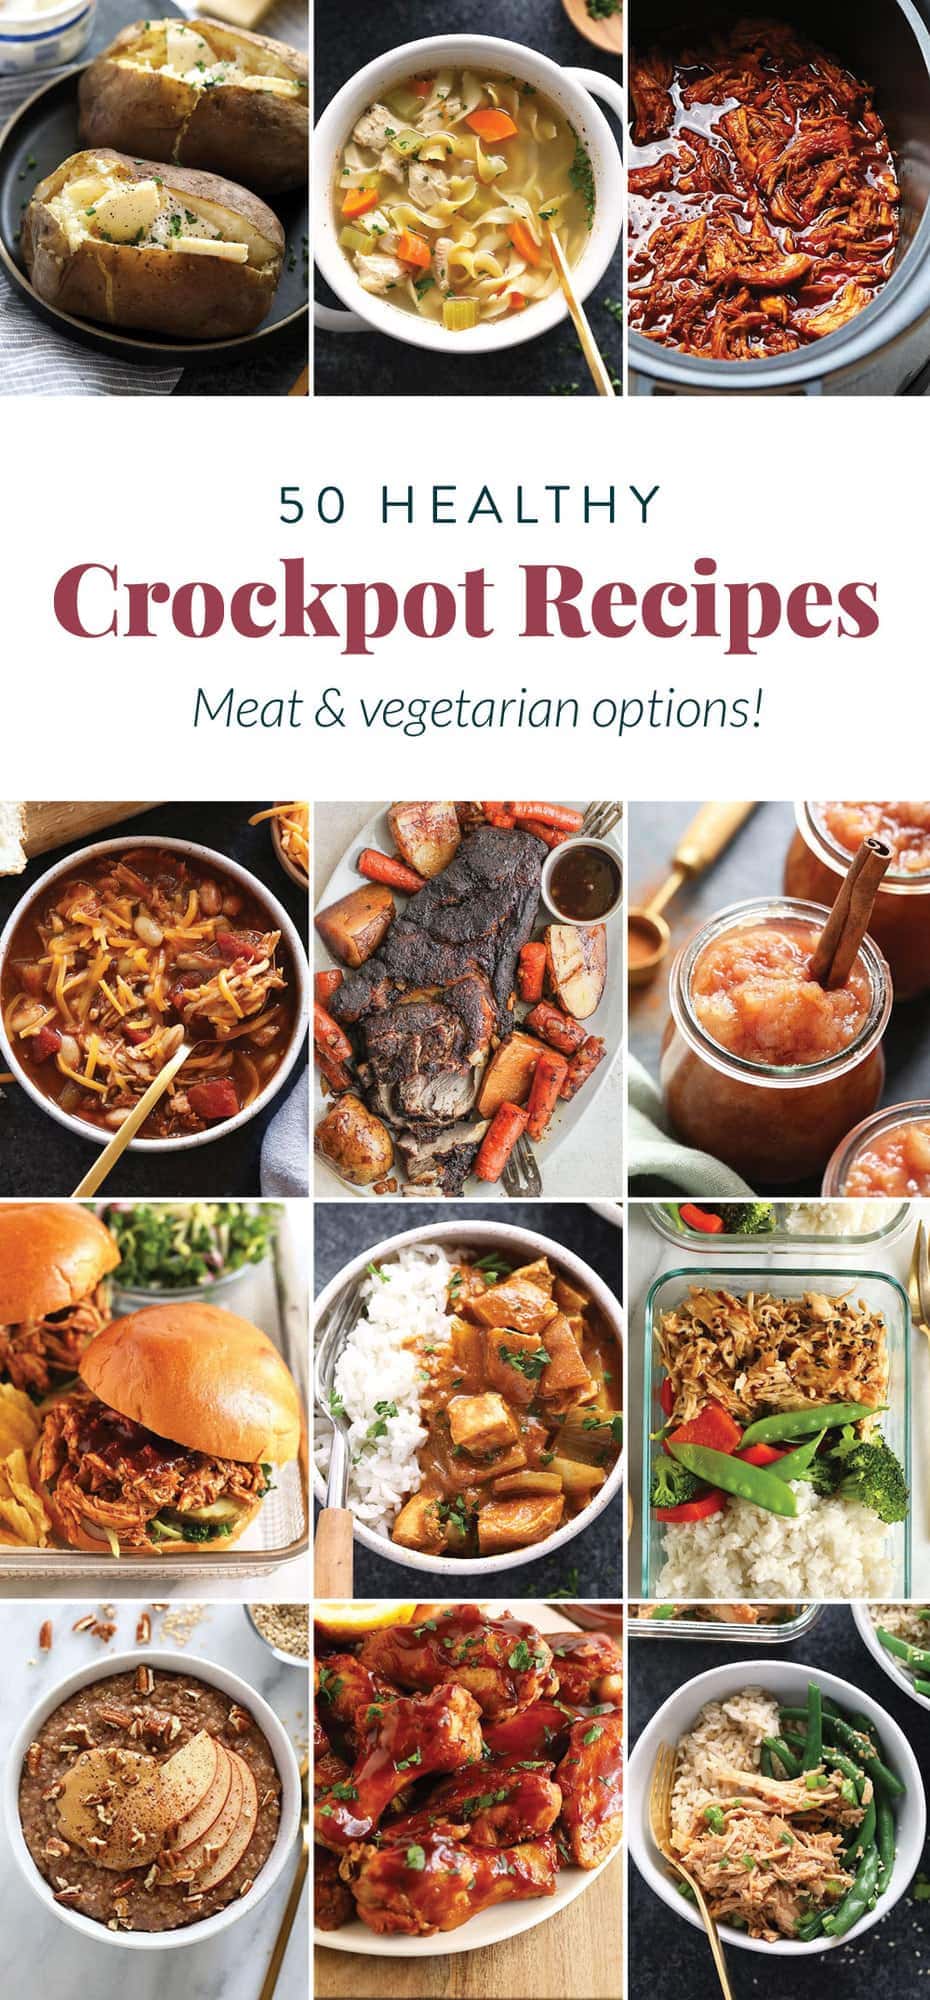 https://fitfoodiefinds.com/wp-content/uploads/2020/10/crockpot-recipes.jpg